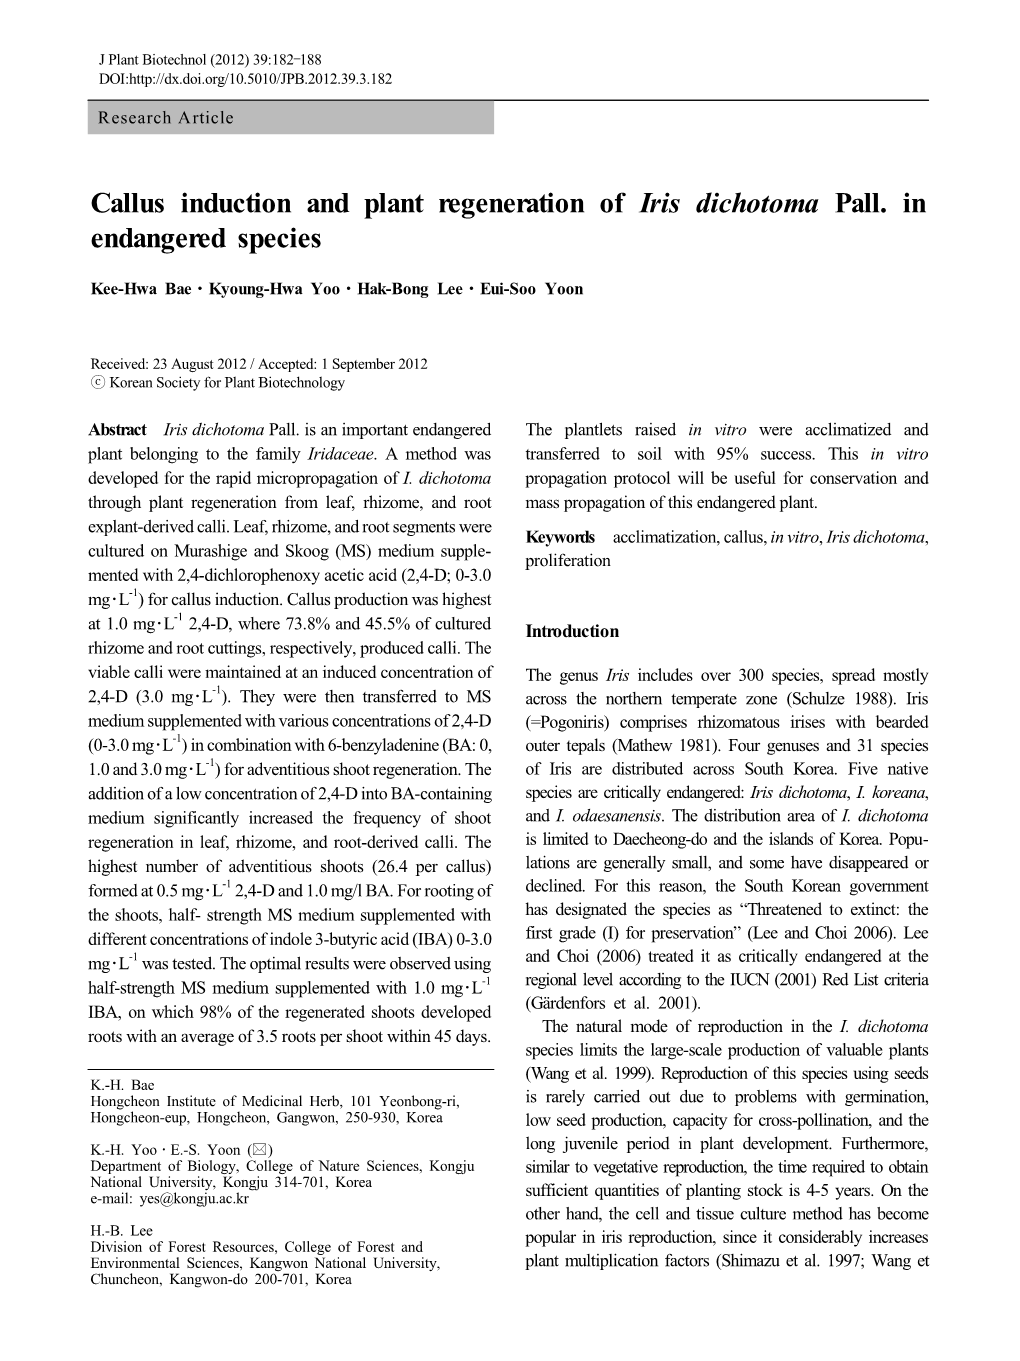 Callus Induction and Plant Regeneration of Iris Dichotoma Pall